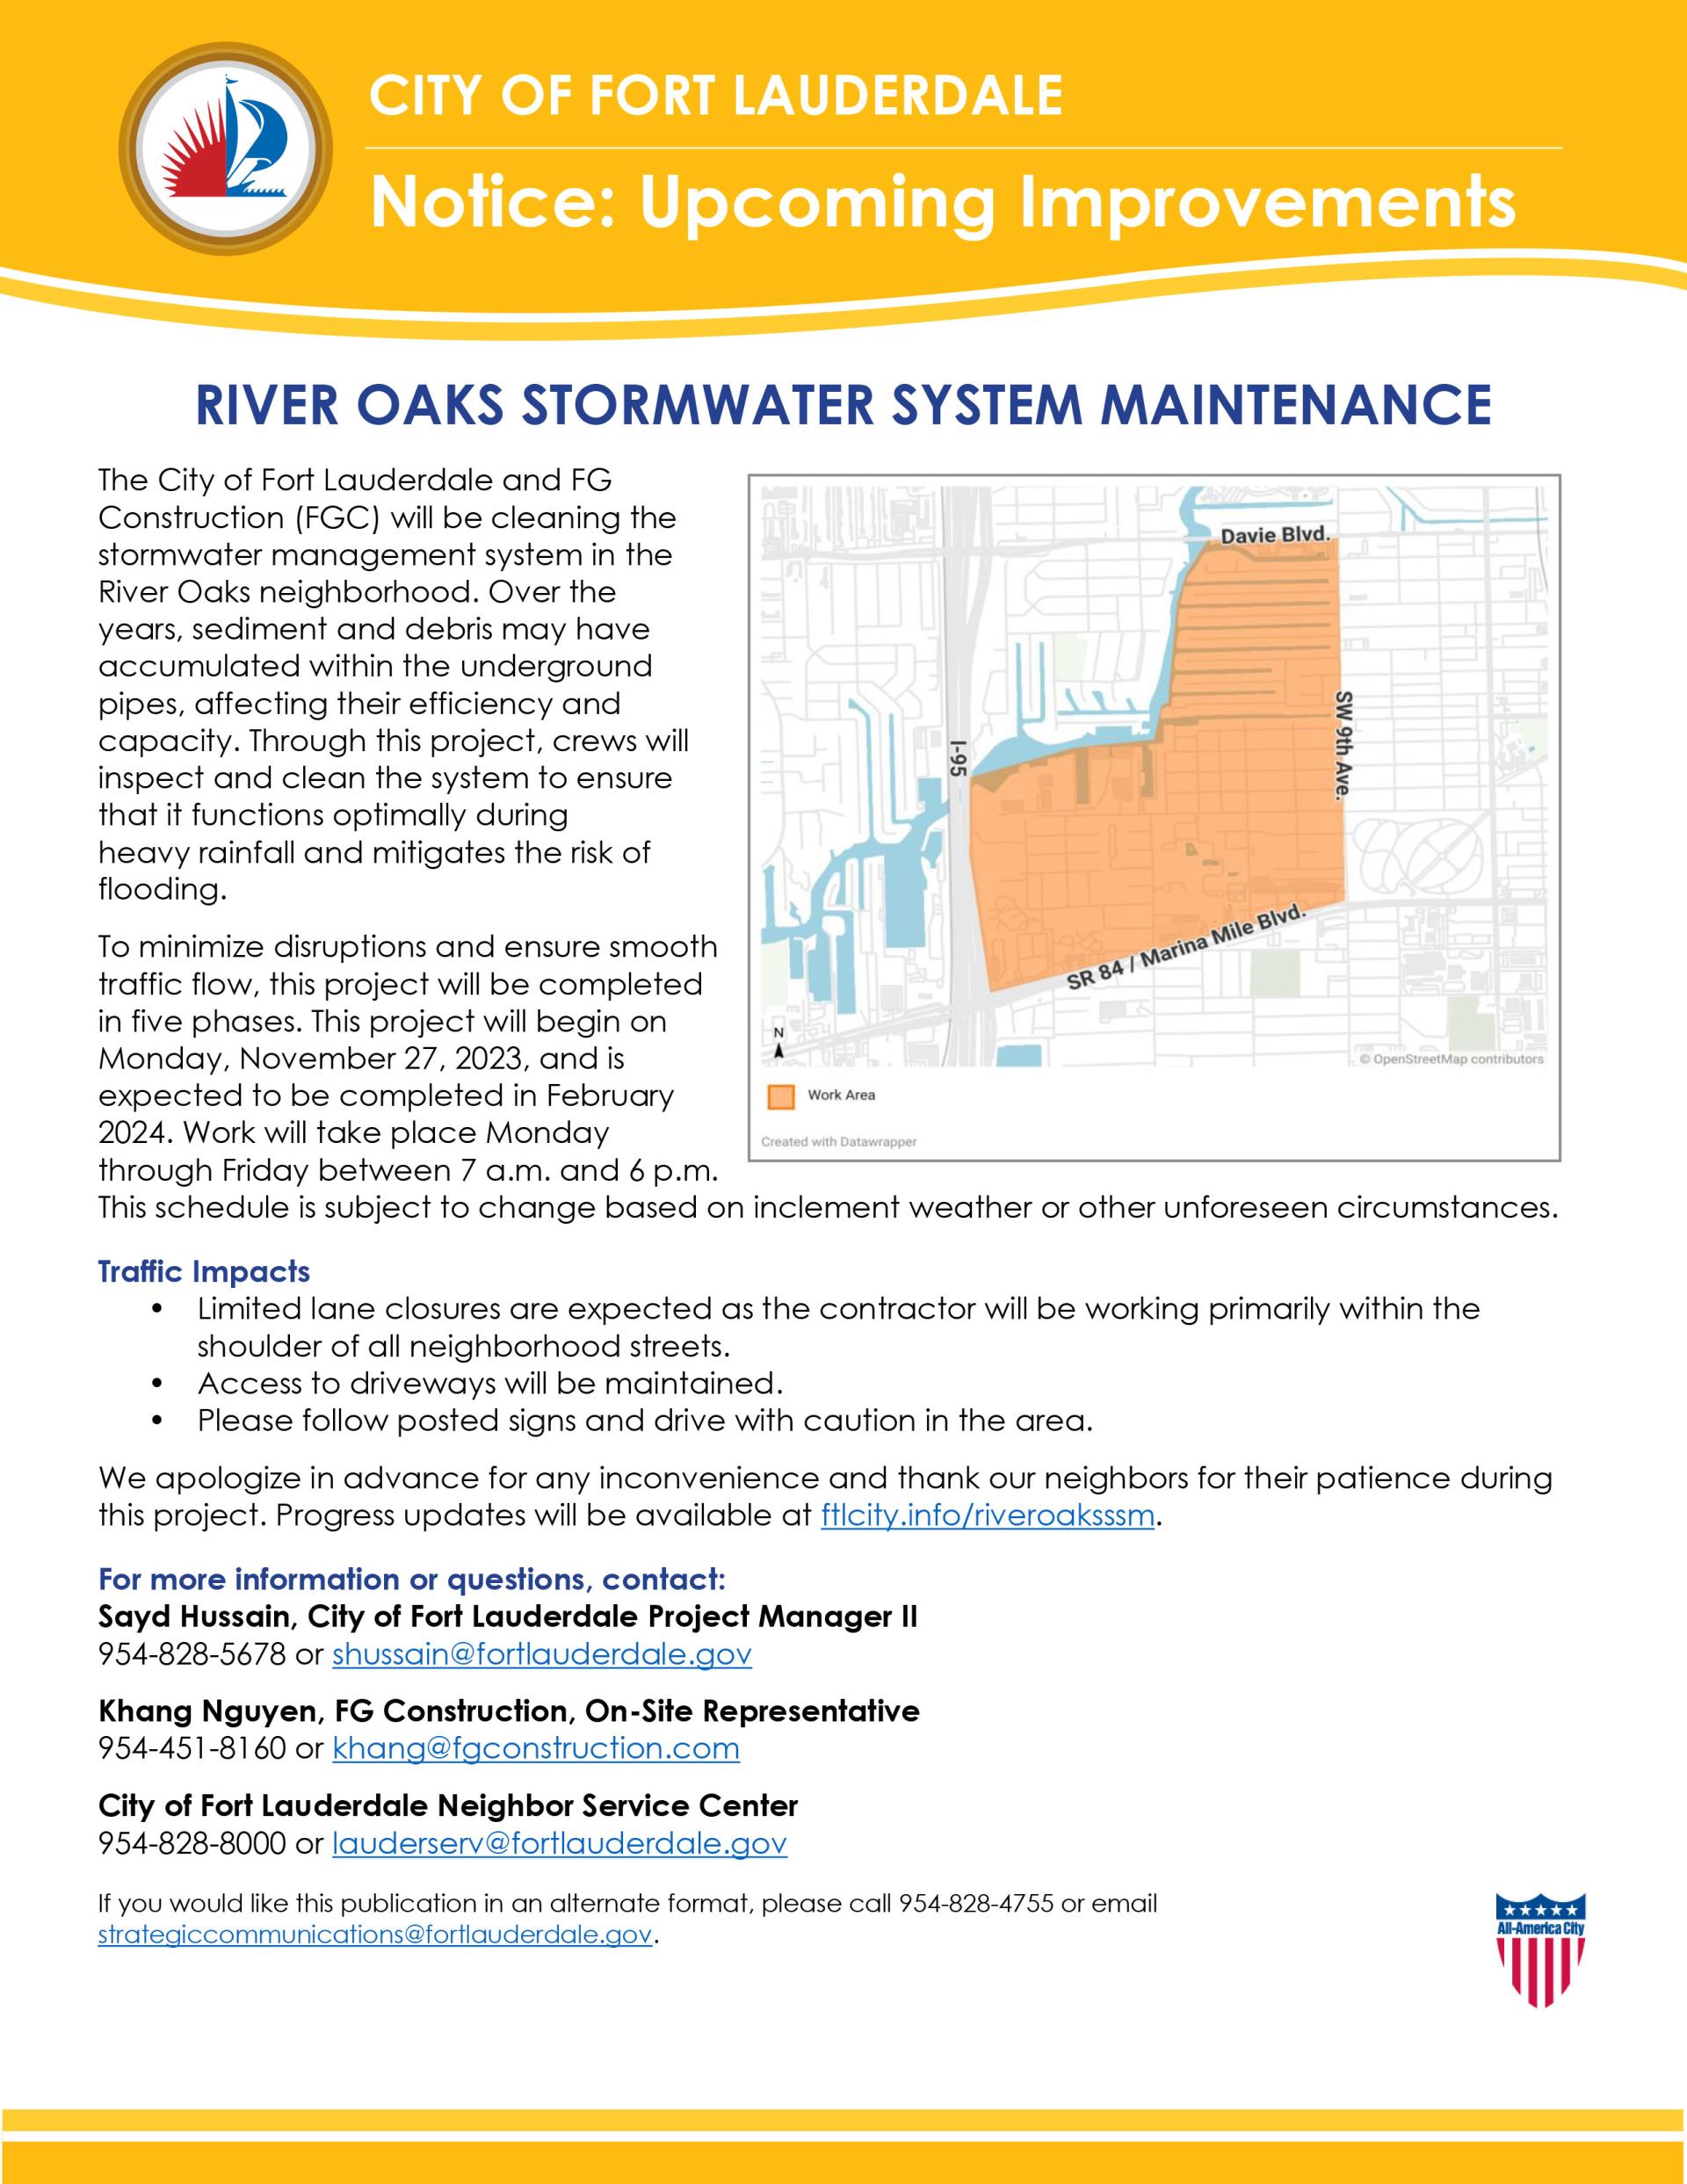 River-Oaks-Stormwater-System-Maintenance